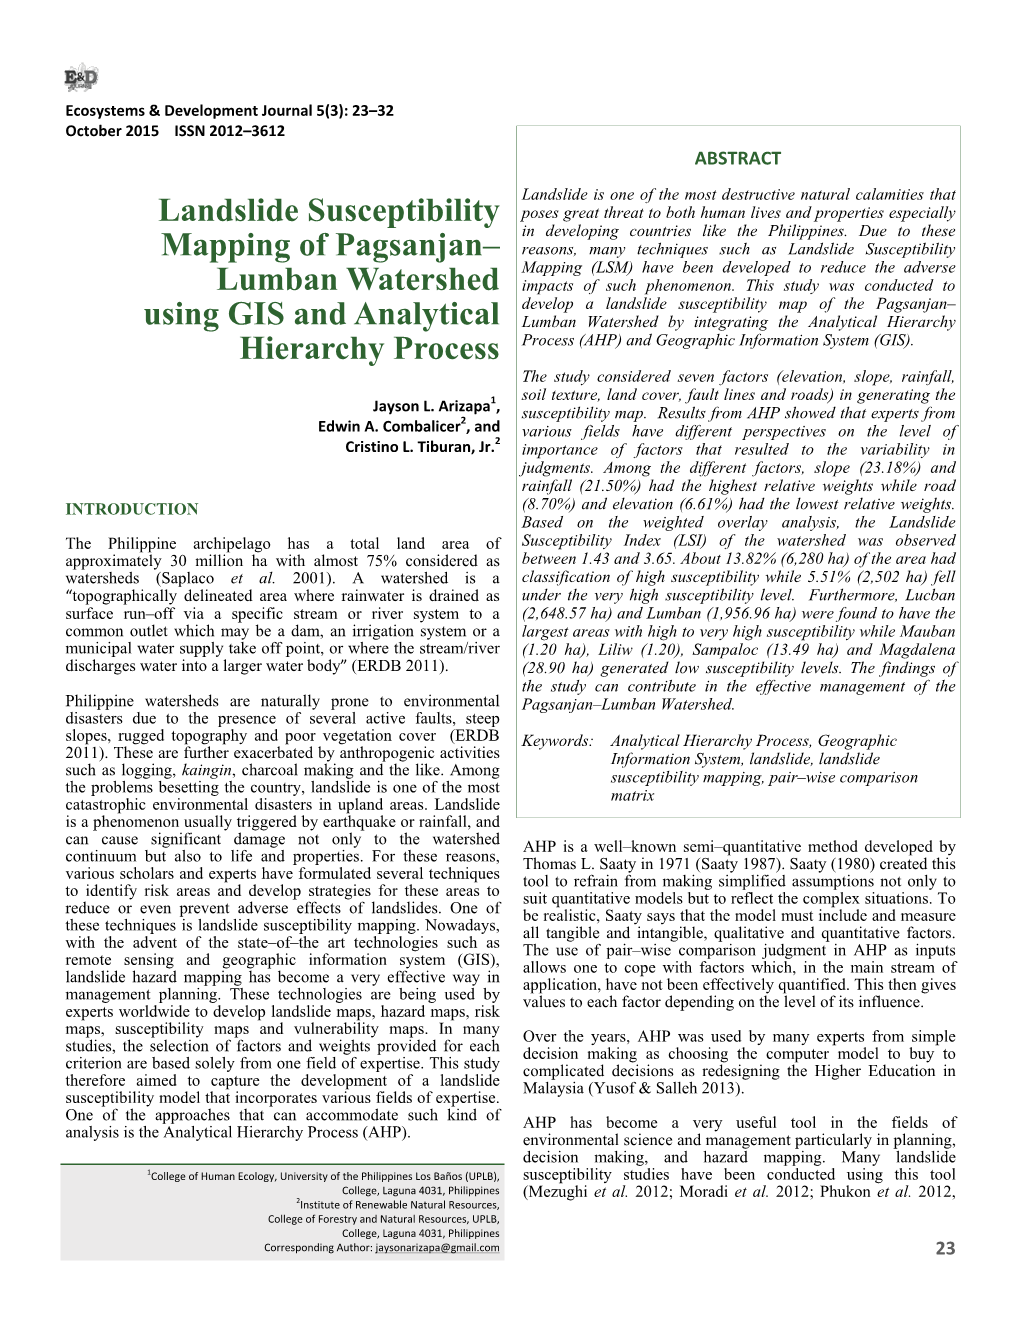 Landslide Susceptibility Mapping of Pagsanjan– Lumban Watershed